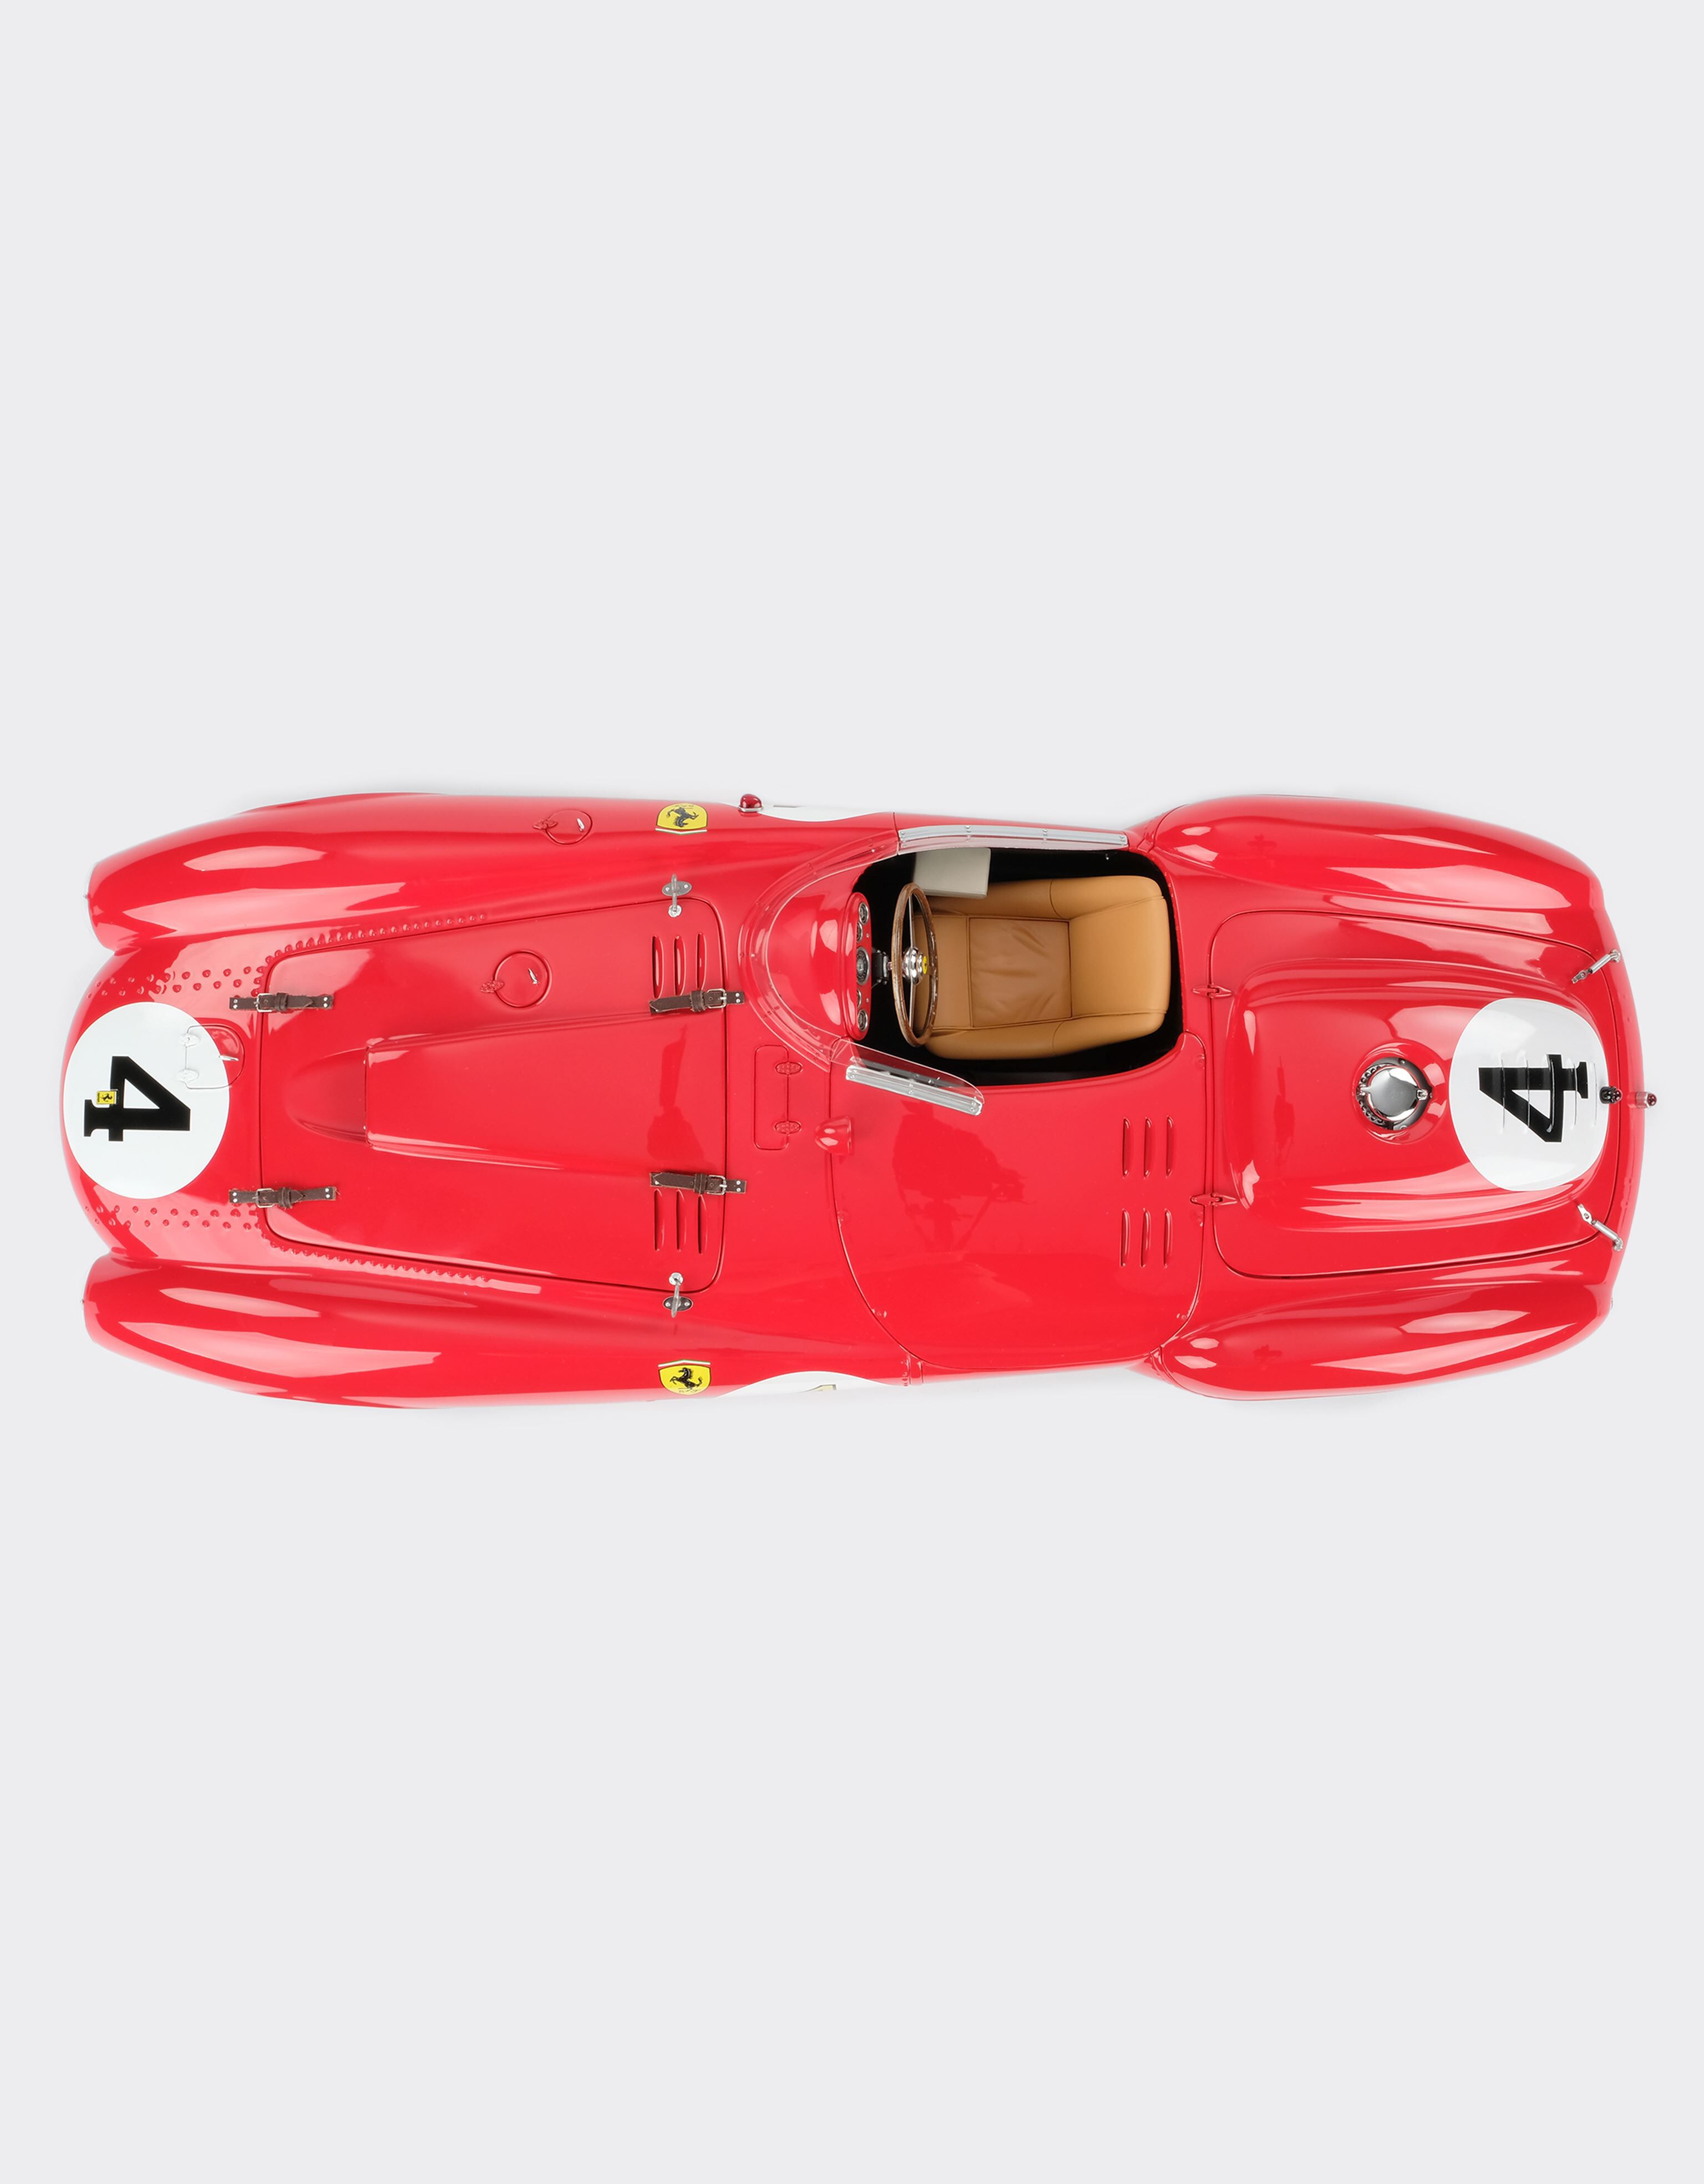 Ferrari Ferrari 375 Plus 1st Le Mans model in 1:8 scale 红色 L5241f